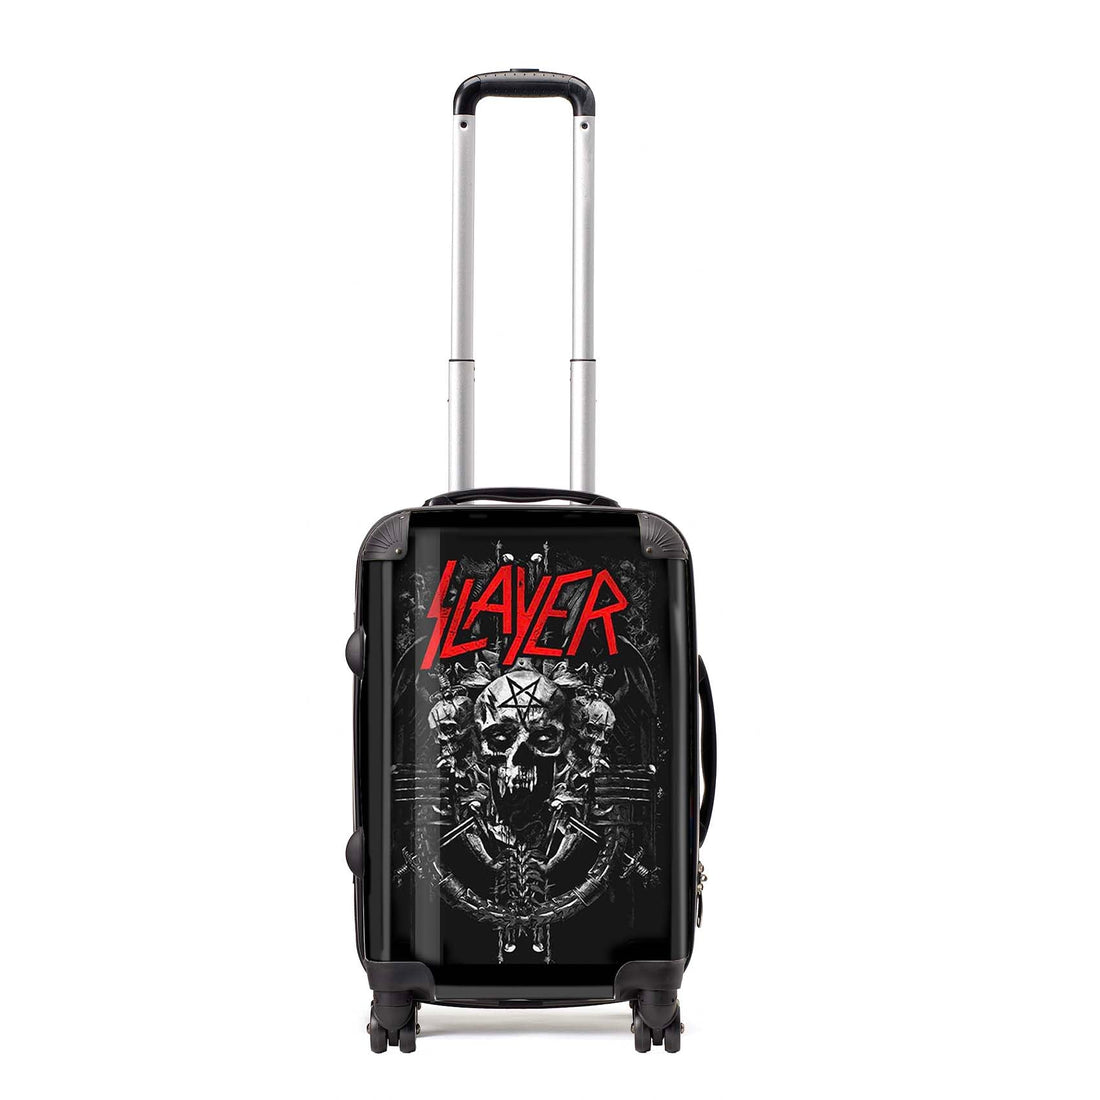 Rocksax Slayer Travel Bag Luggage - Reign of Fire